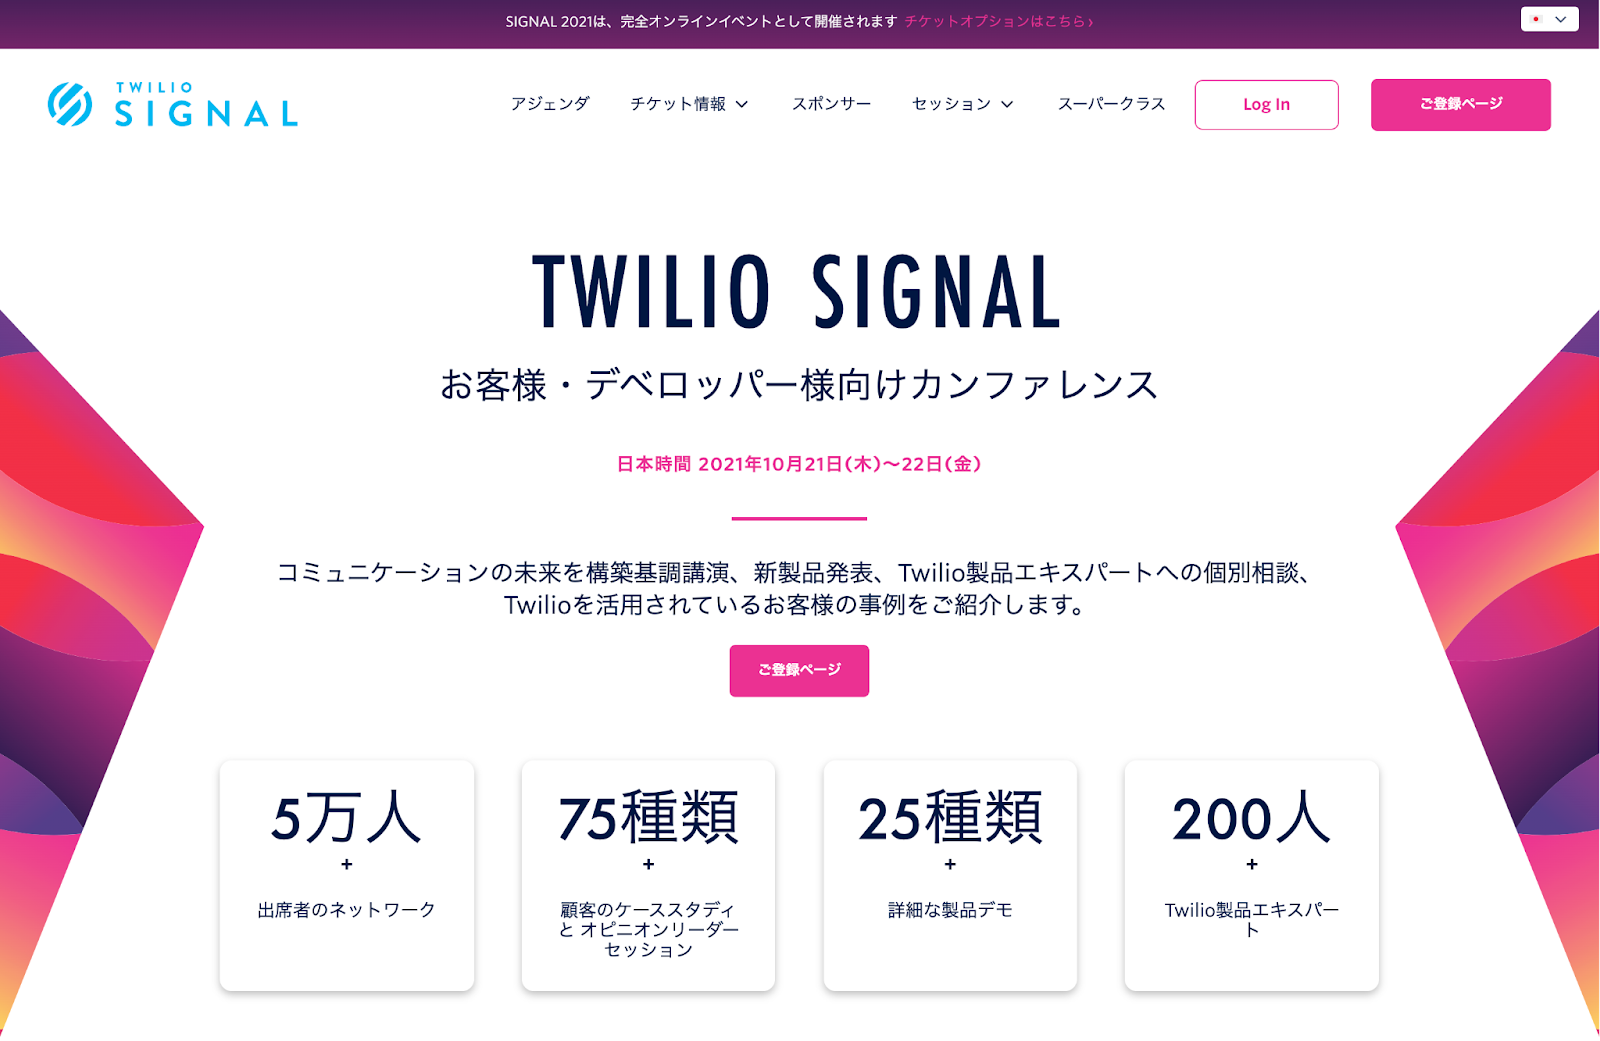 twilio-signal2021-jp